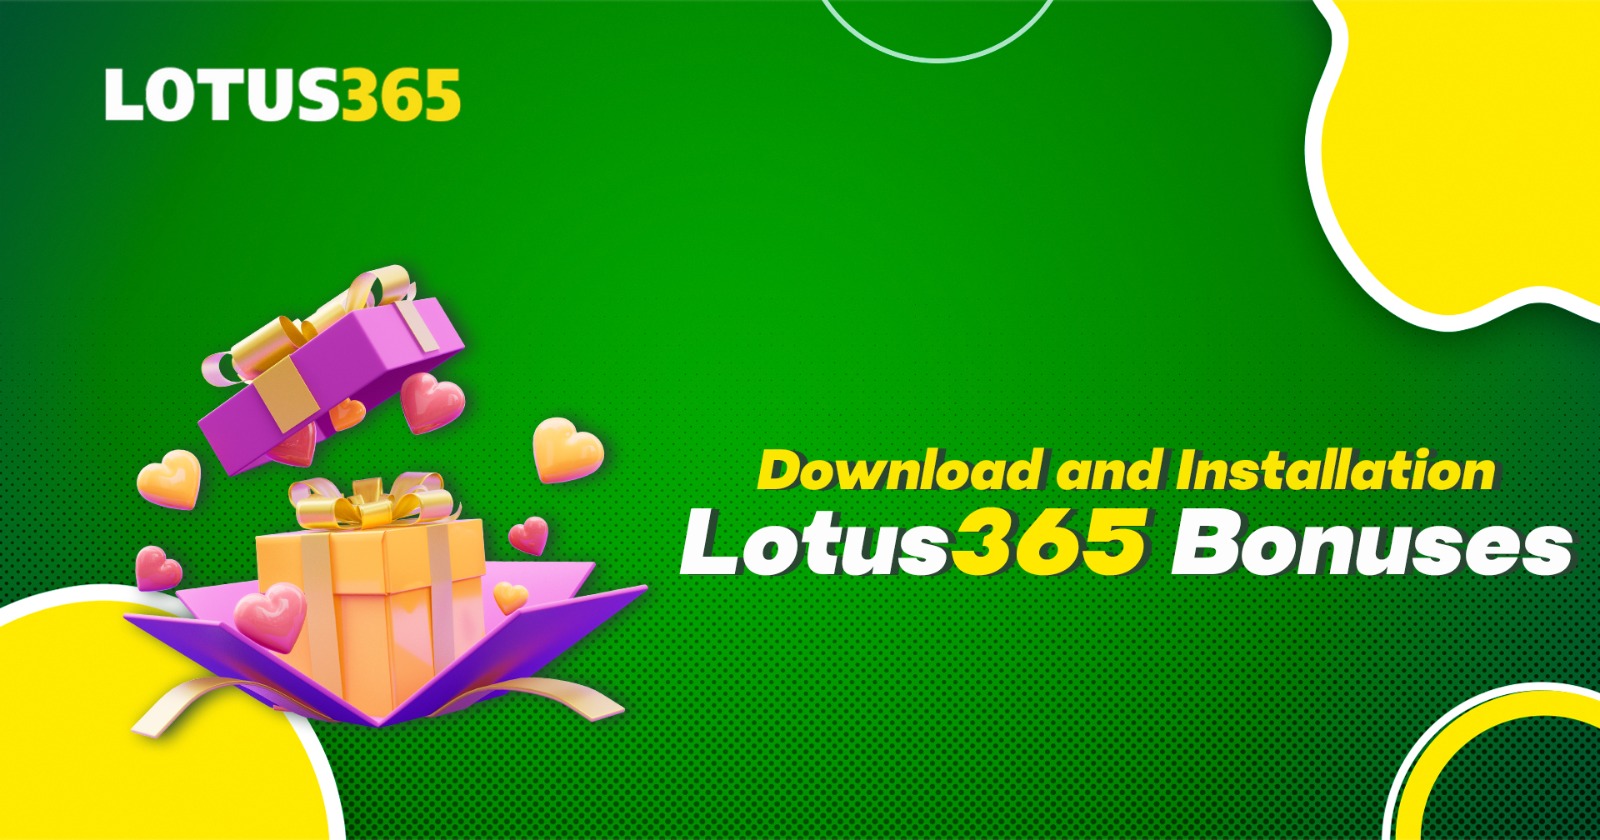 Download and Installation Lotus365 Bonuses